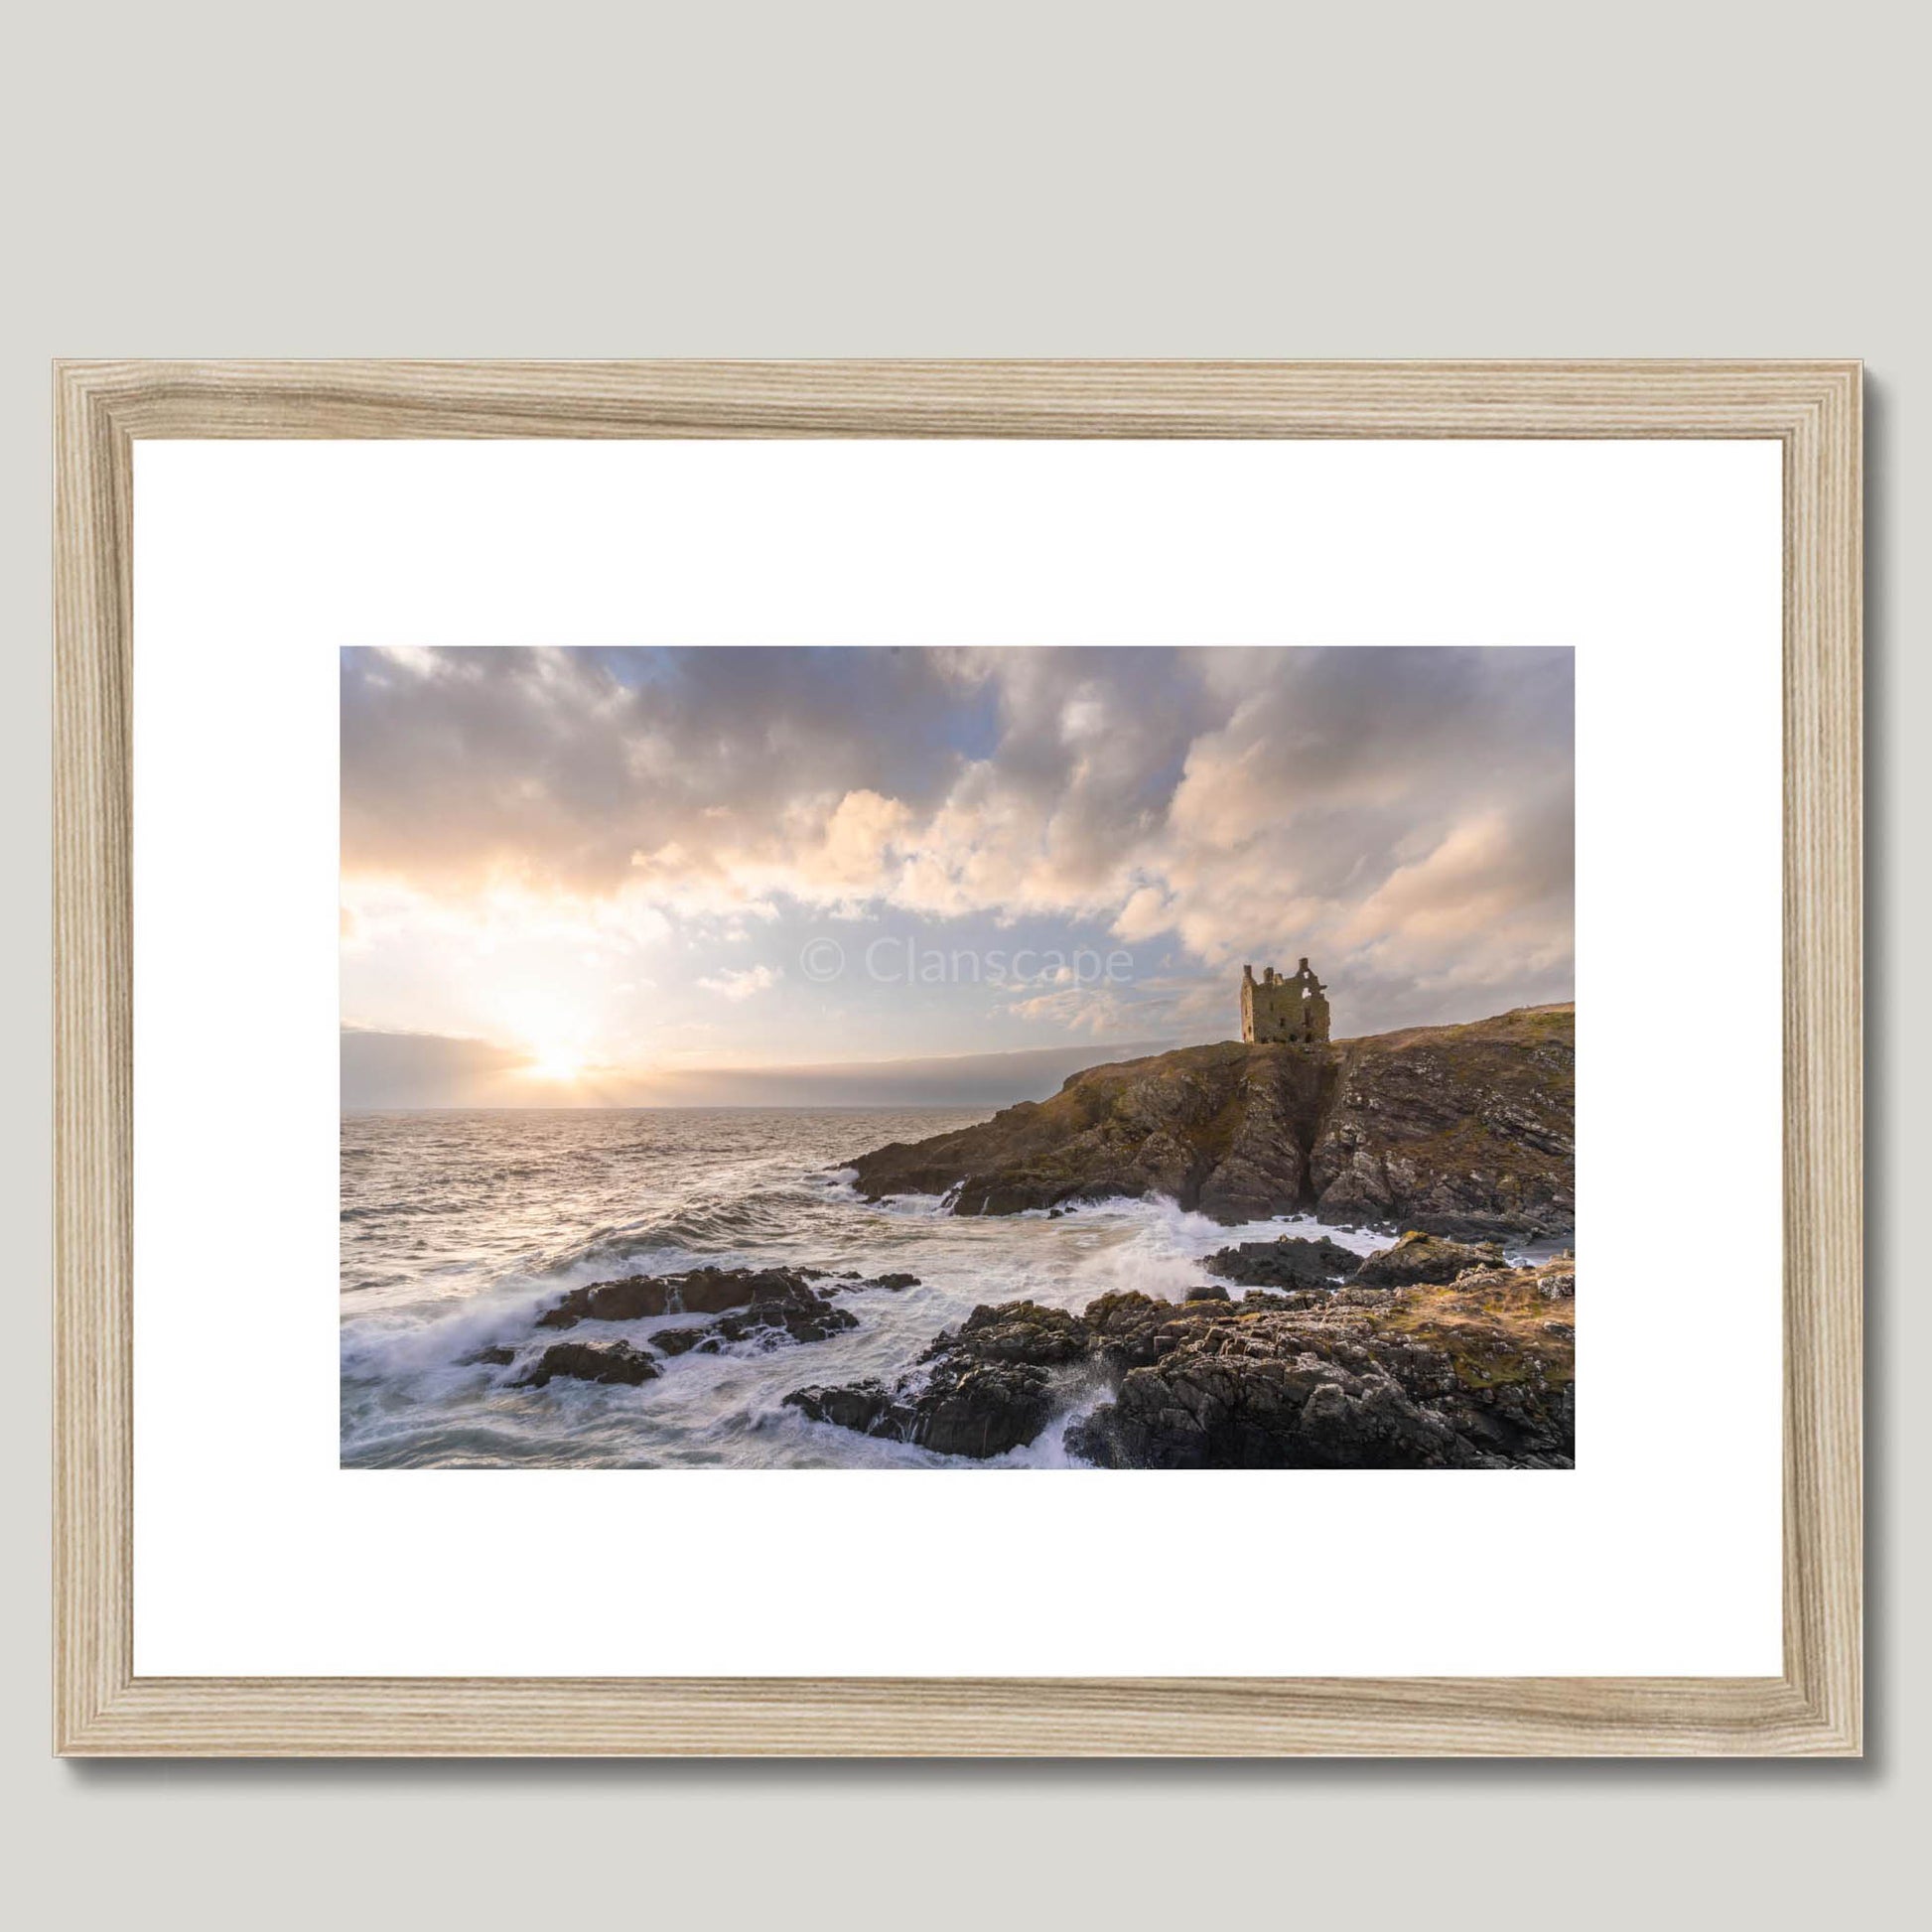 Clan Adair - Dunskey Castle - Framed & Mounted Photo Print 16"x12" Natural